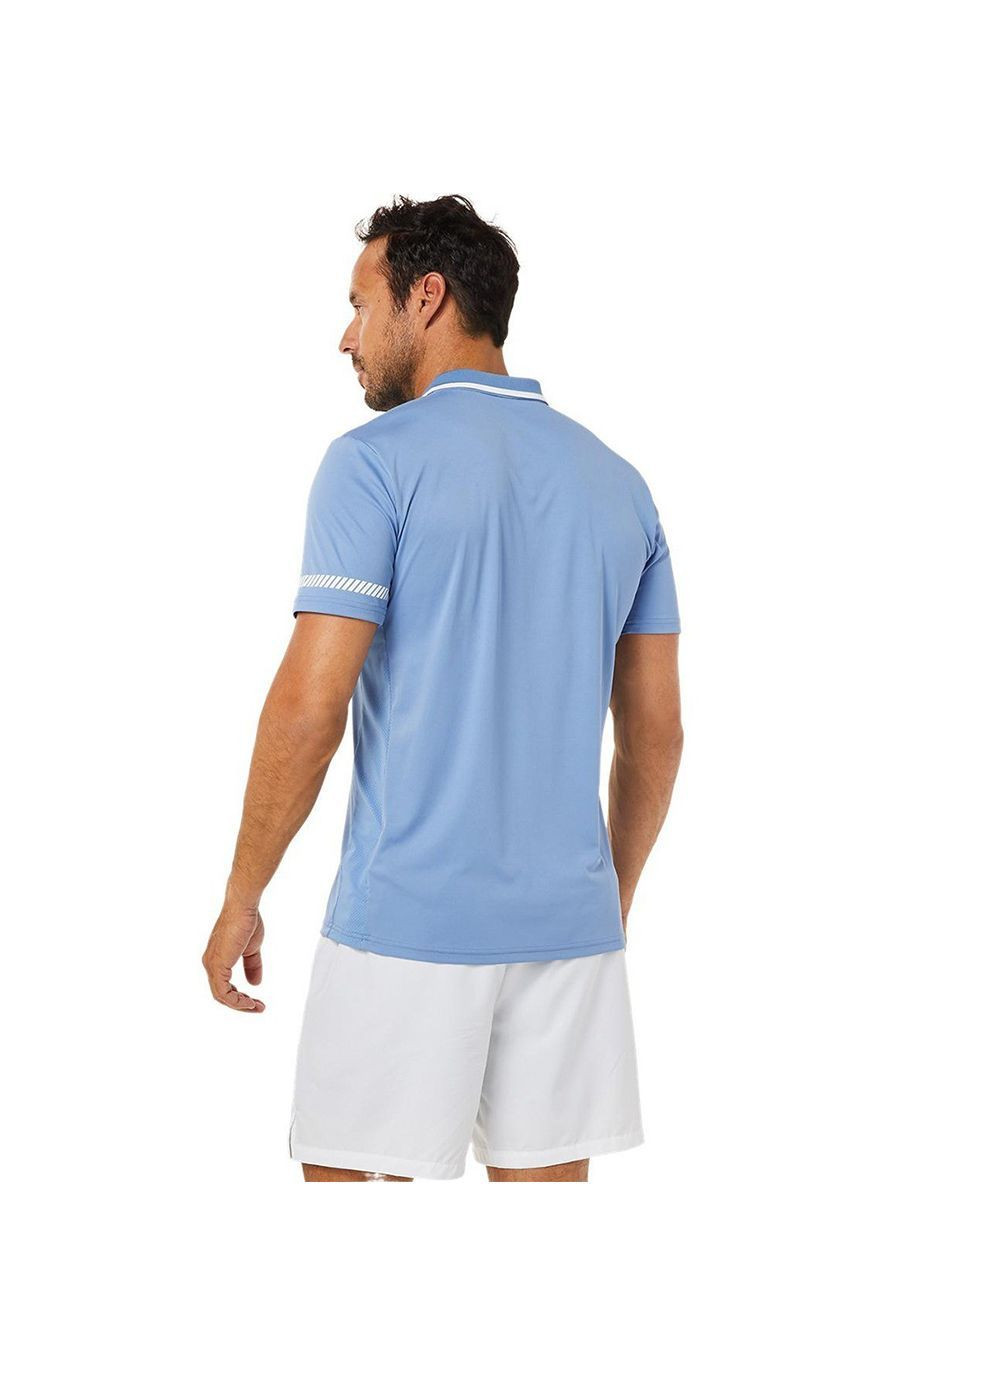 Голубая футболка муж. court polo shirt голубой Asics